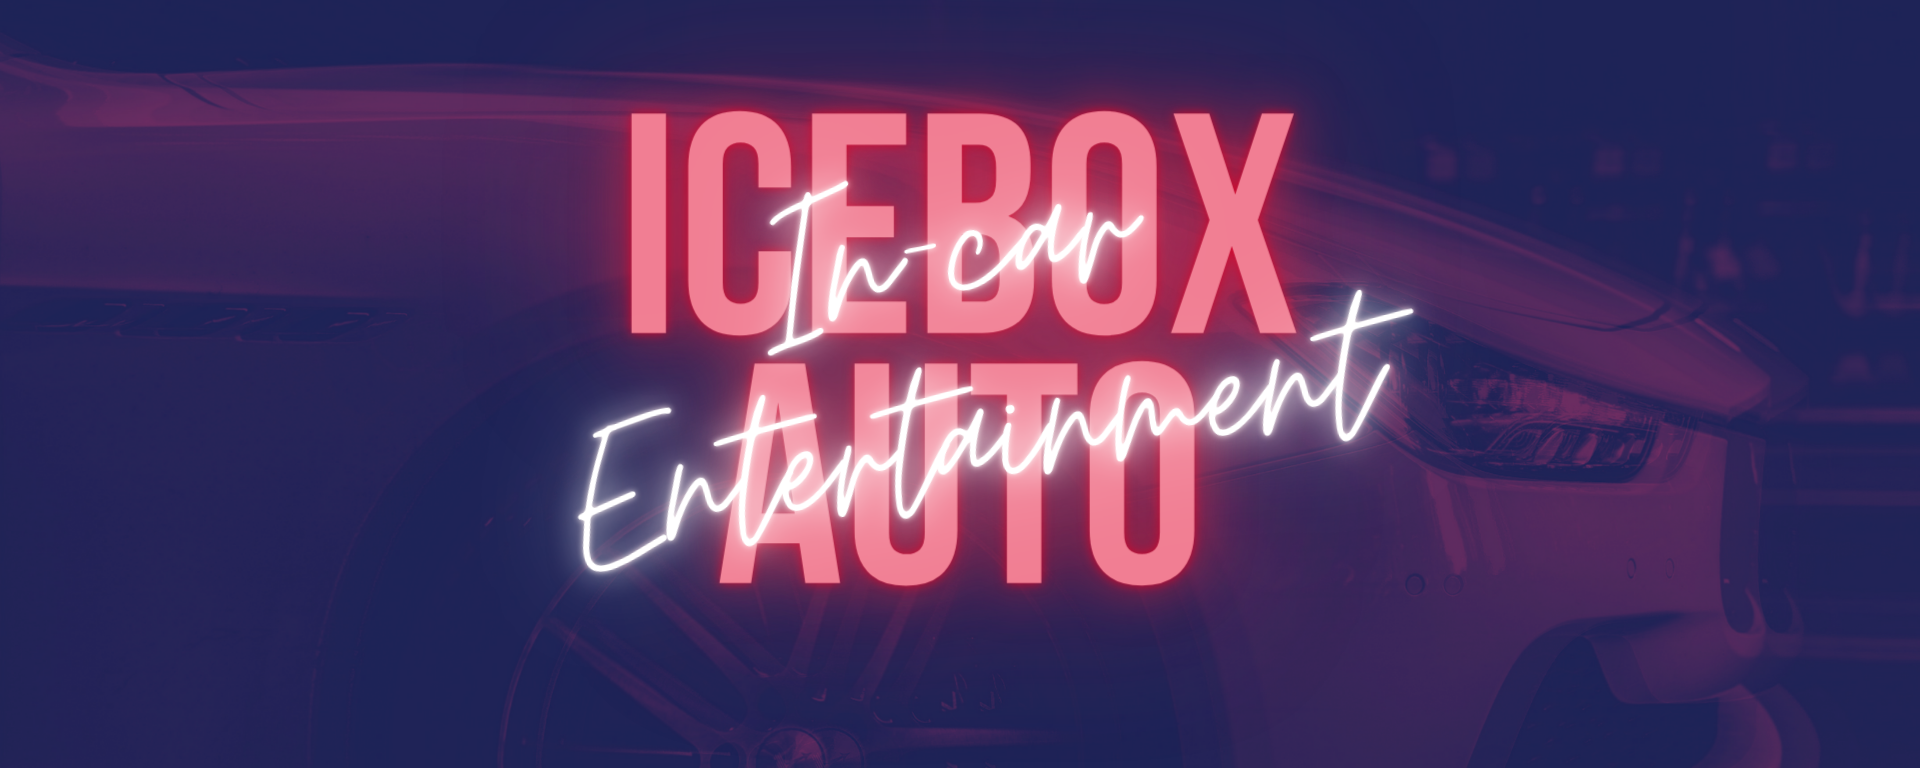 Iceboxauto Home Page neon banner image